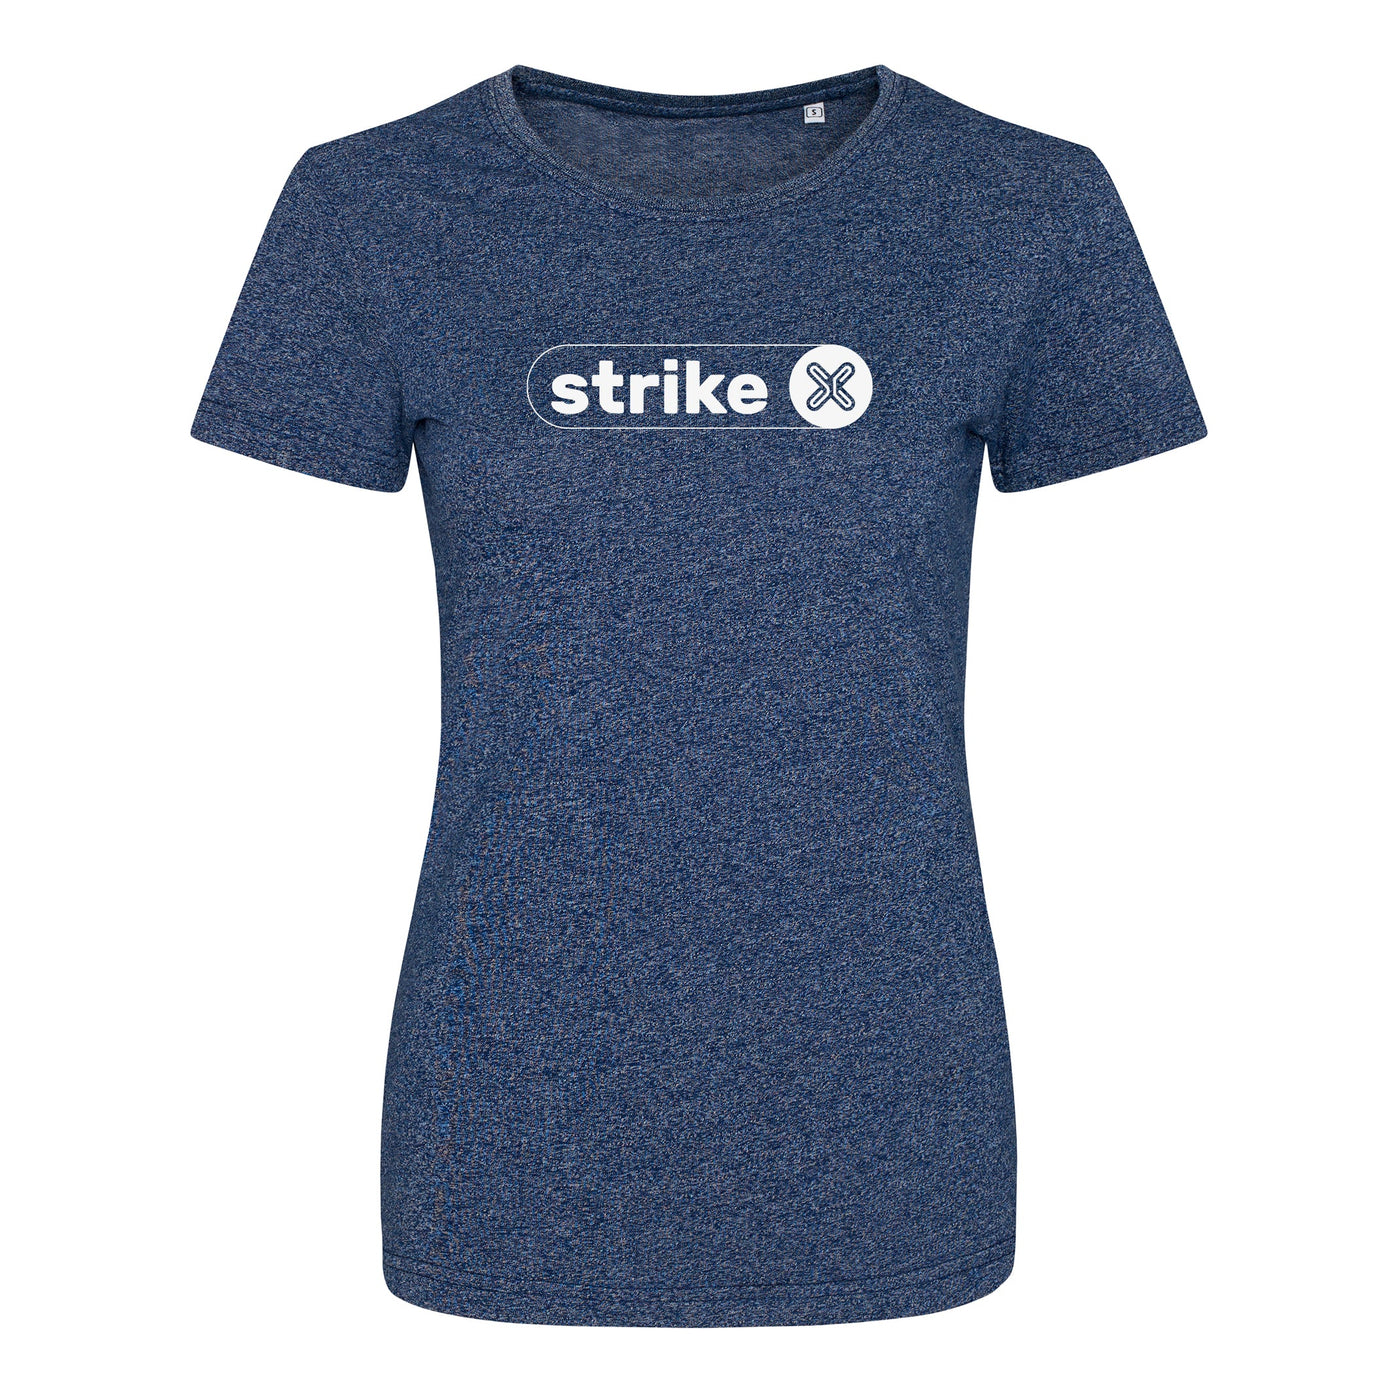 StrikeCloud Womens Strike T-Shirt